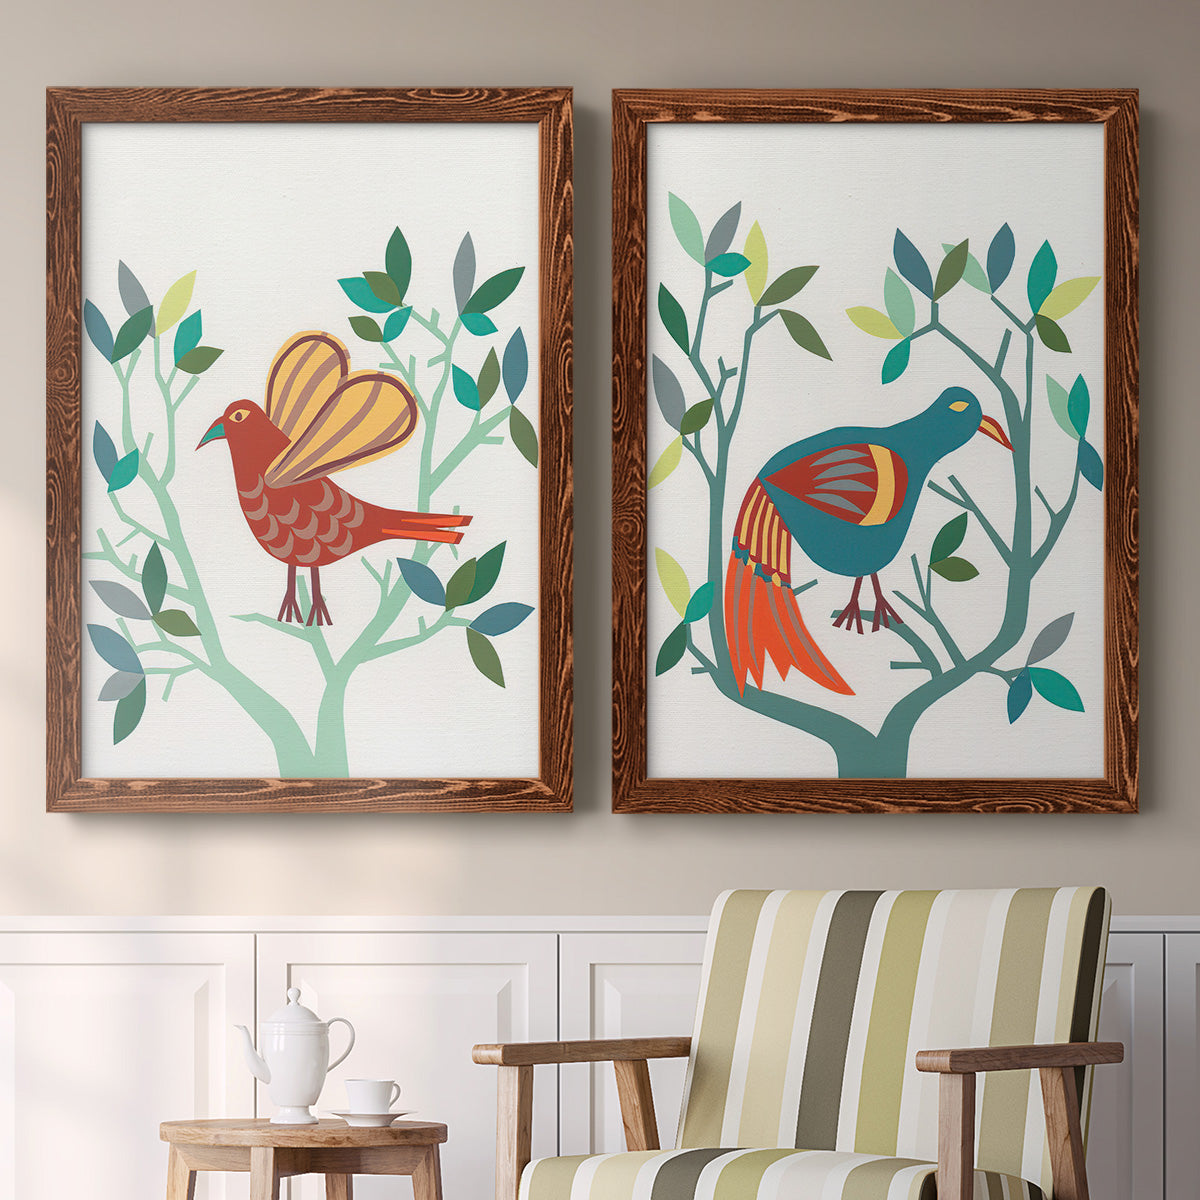 Whitty Bird I - Premium Framed Canvas 2 Piece Set - Ready to Hang